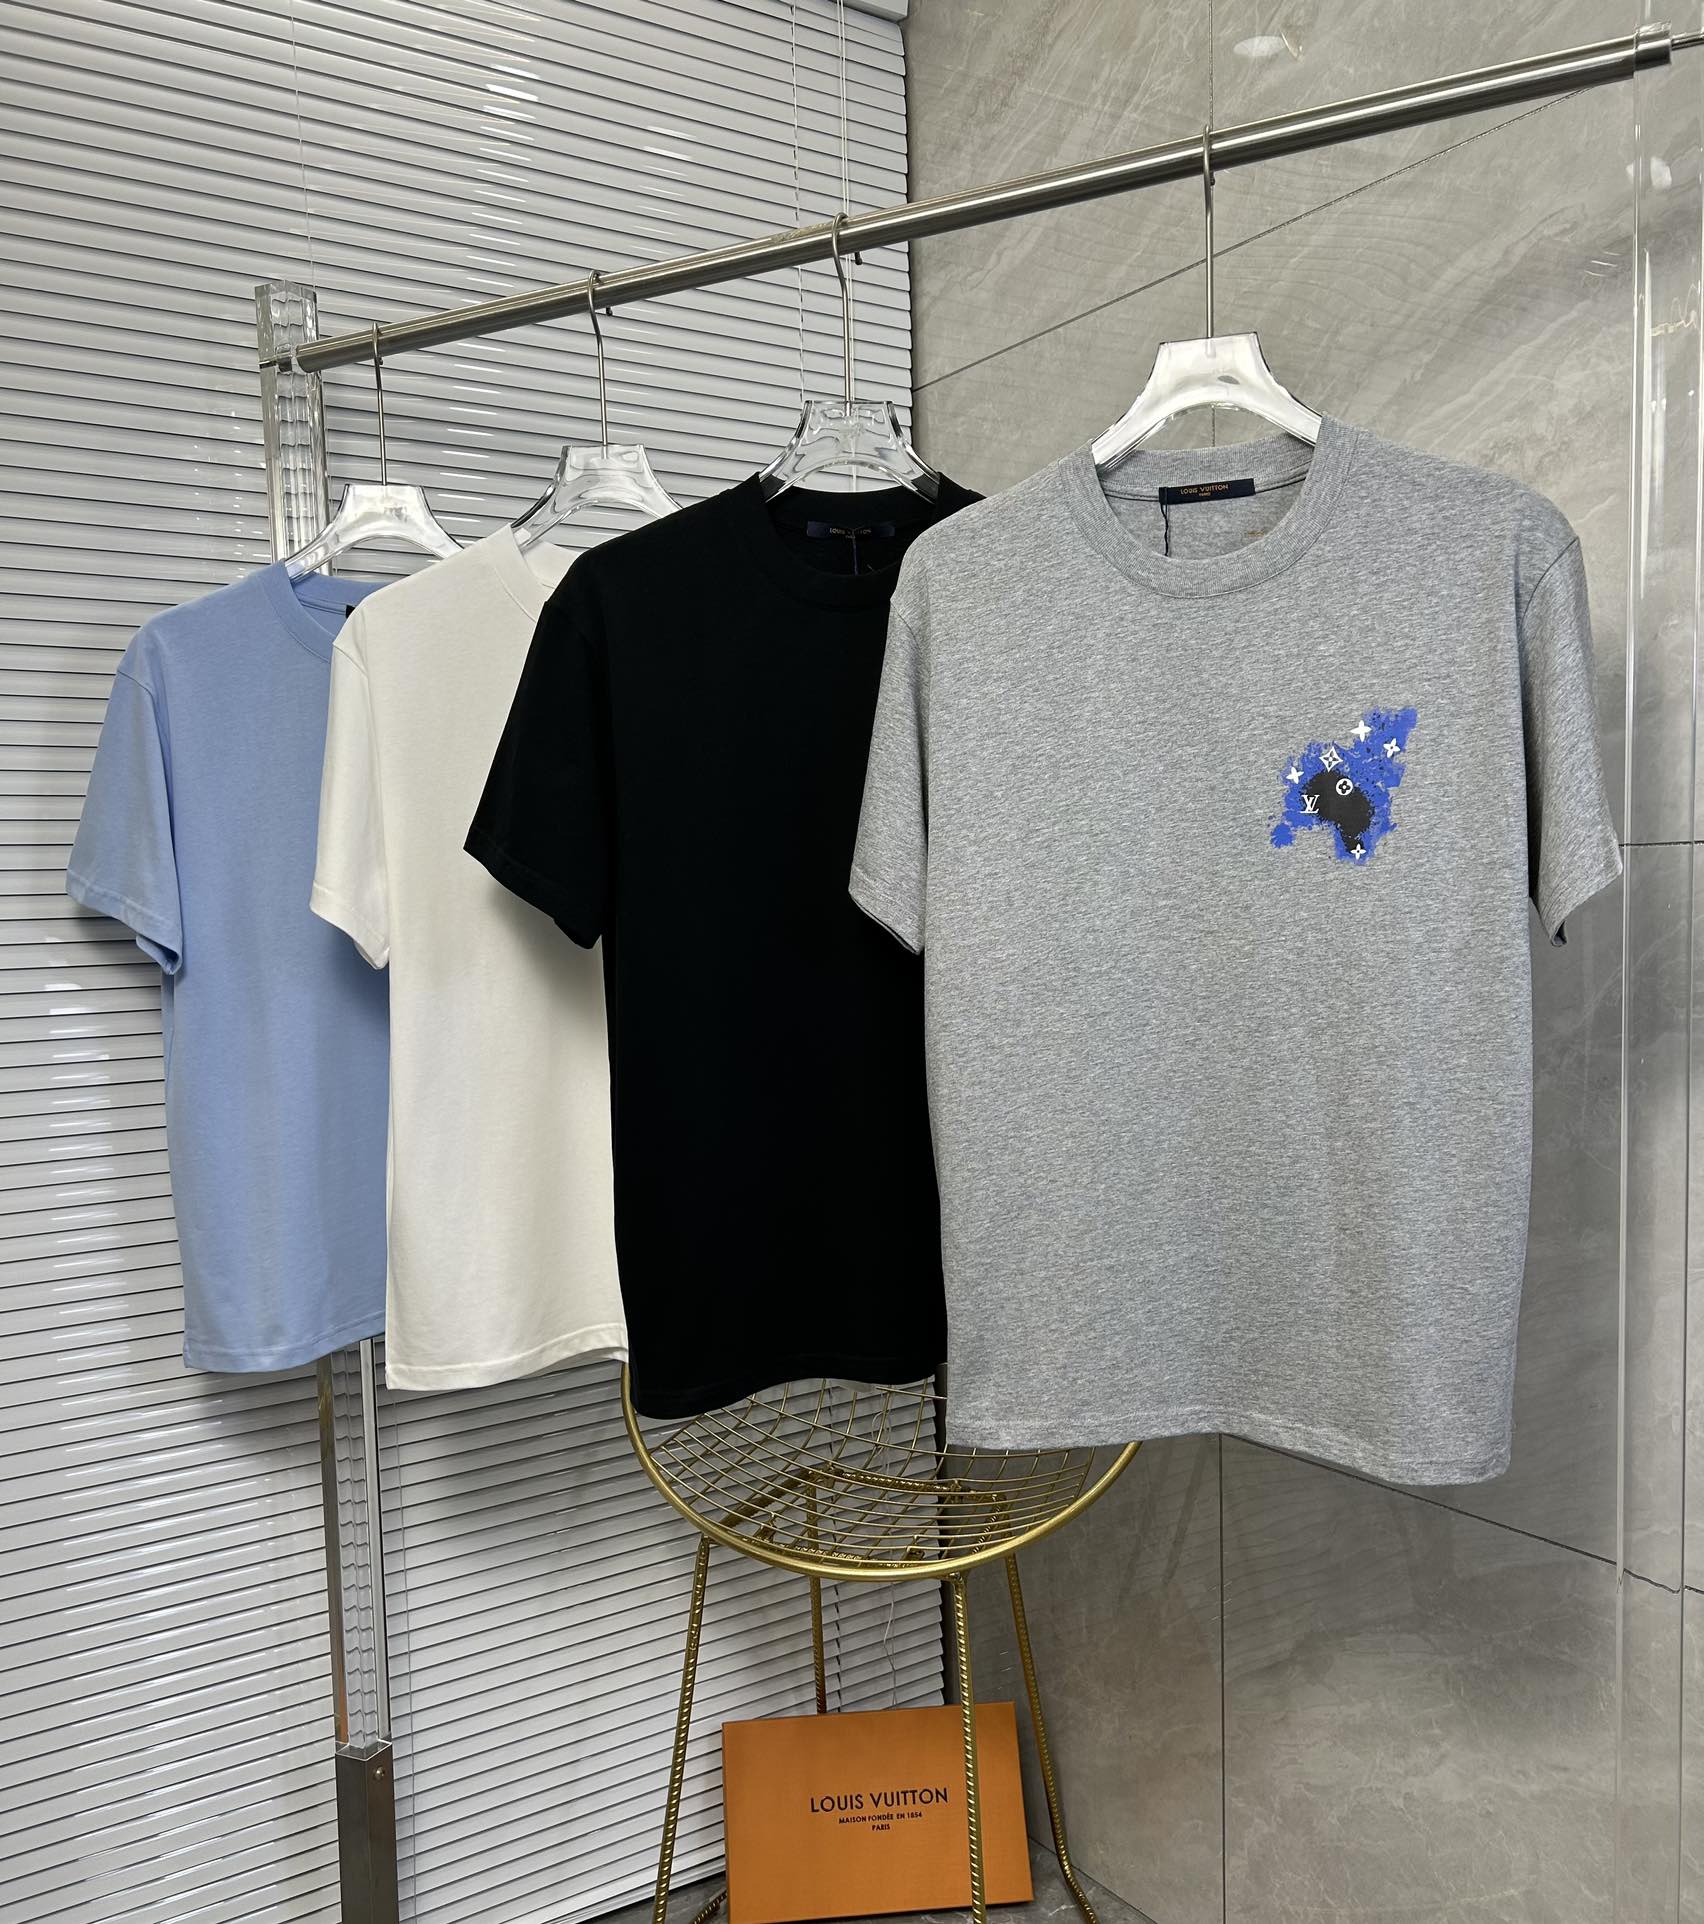 Louis Vuitton Replicas
 Clothing T-Shirt Black Blue Grey Light White Printing Unisex Spring/Summer Collection Fashion Short Sleeve